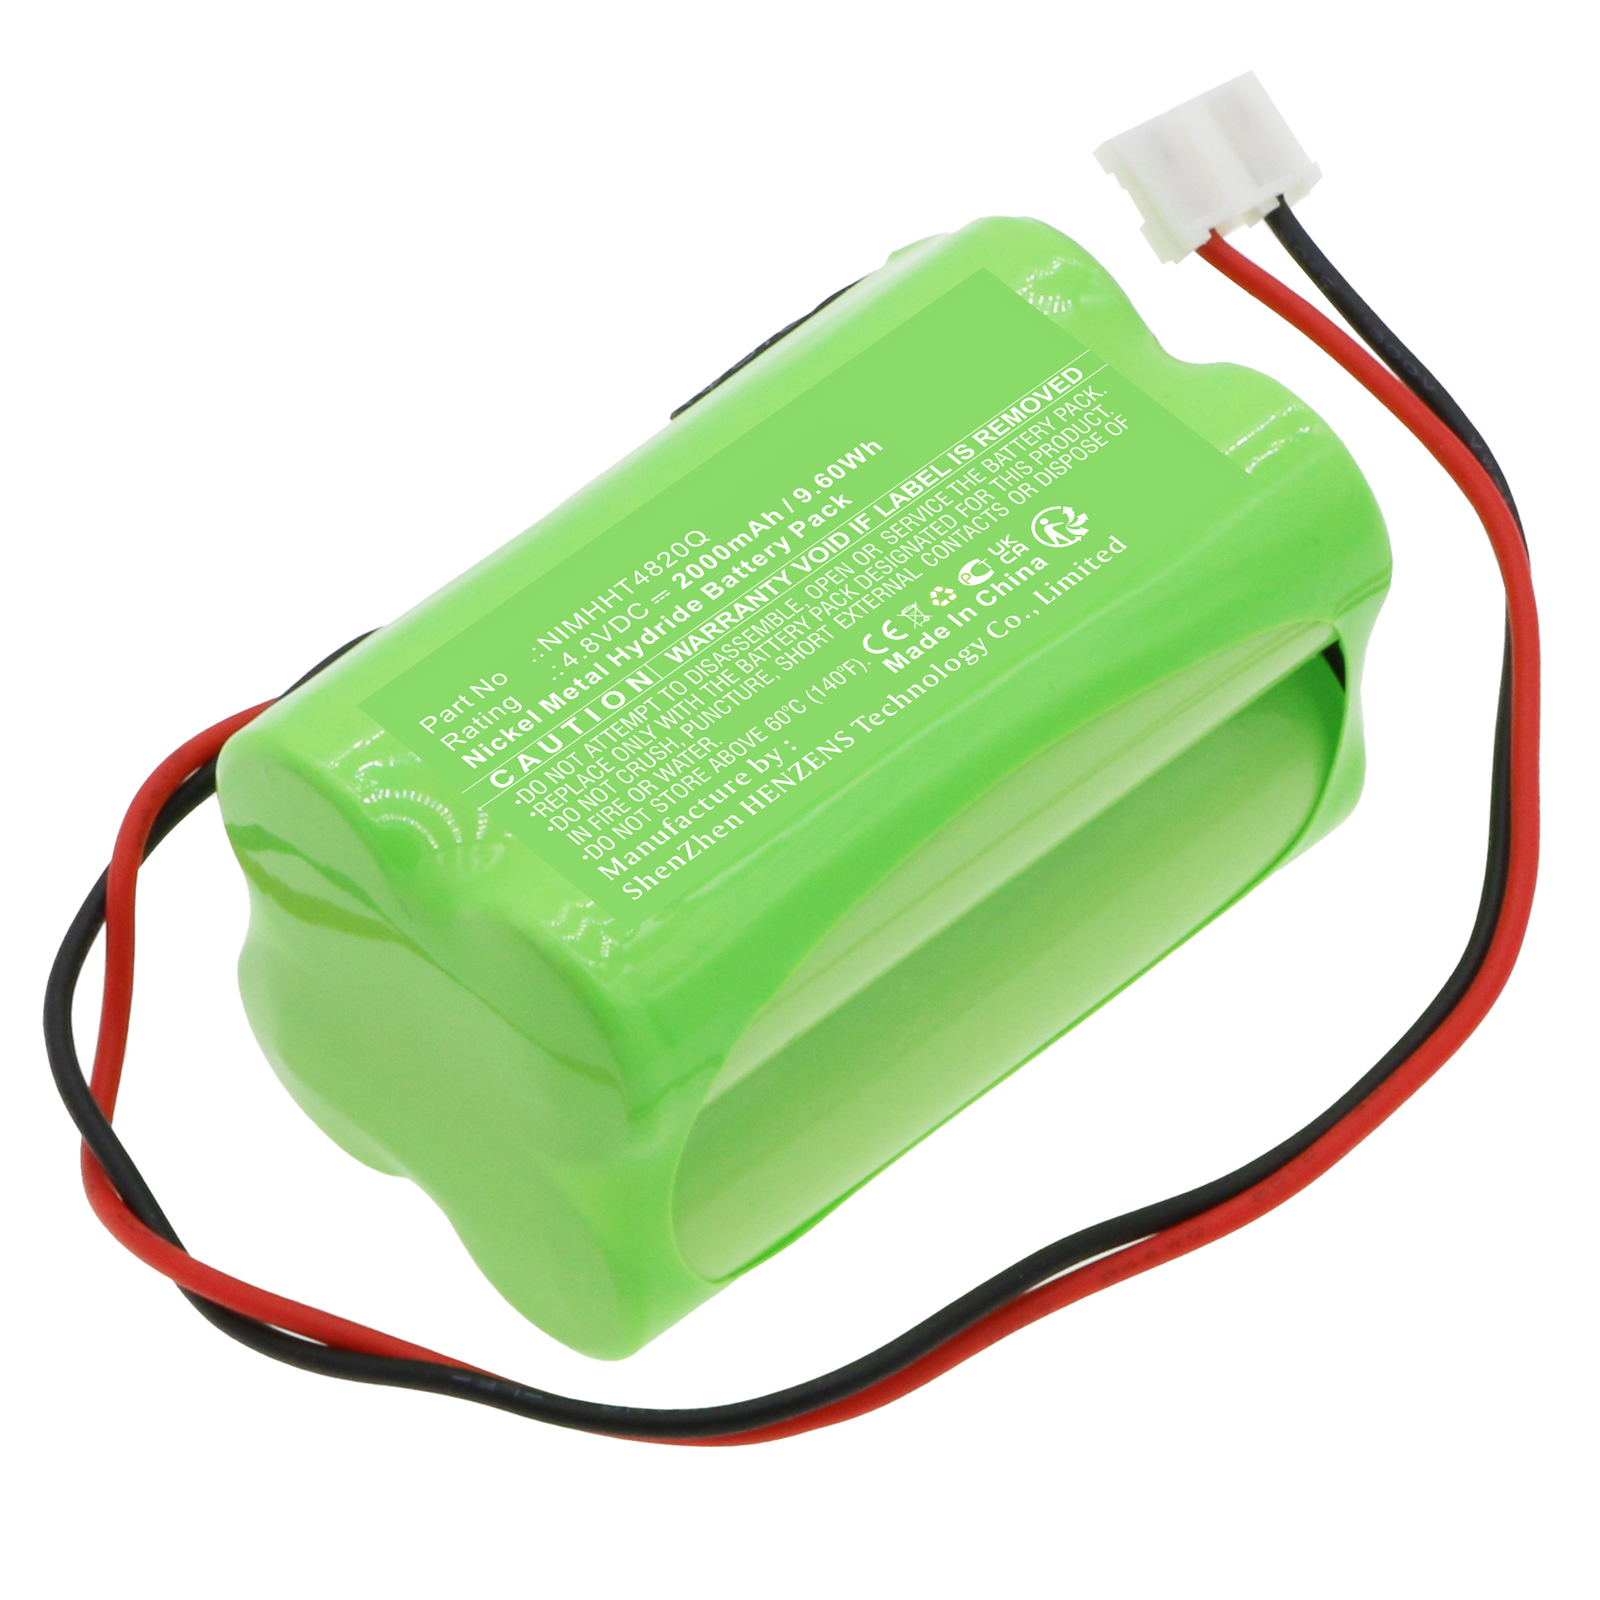 Synergy Digital Emergency Lighting Battery, Compatible with ABM NIMHHT4820Q Emergency Lighting Battery (Ni-MH, 4.8V, 2000mAh)